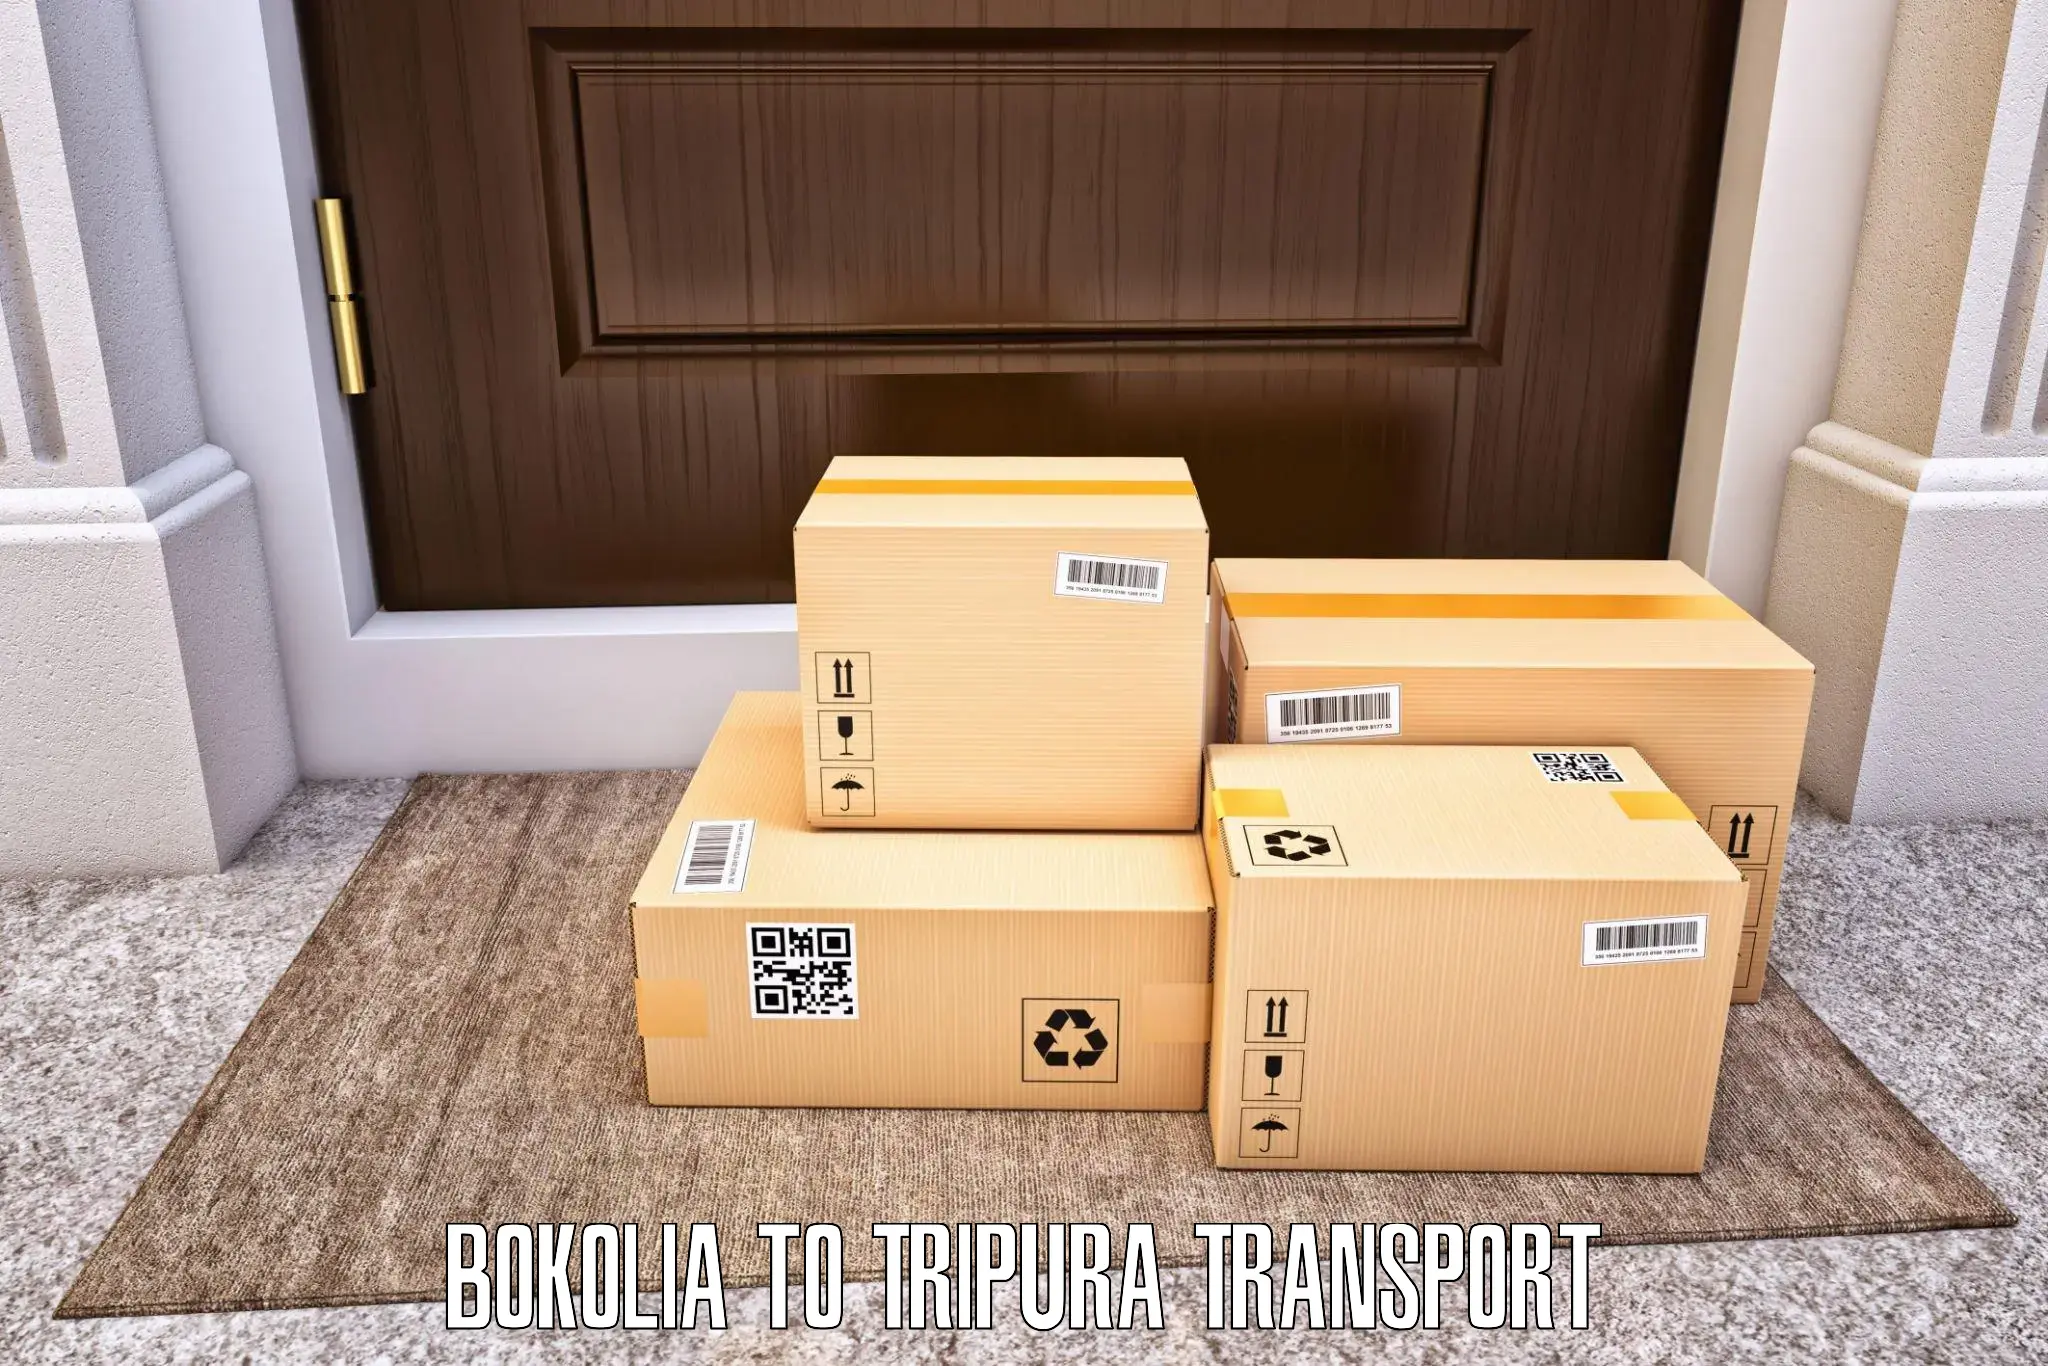 Delivery service Bokolia to Udaipur Tripura